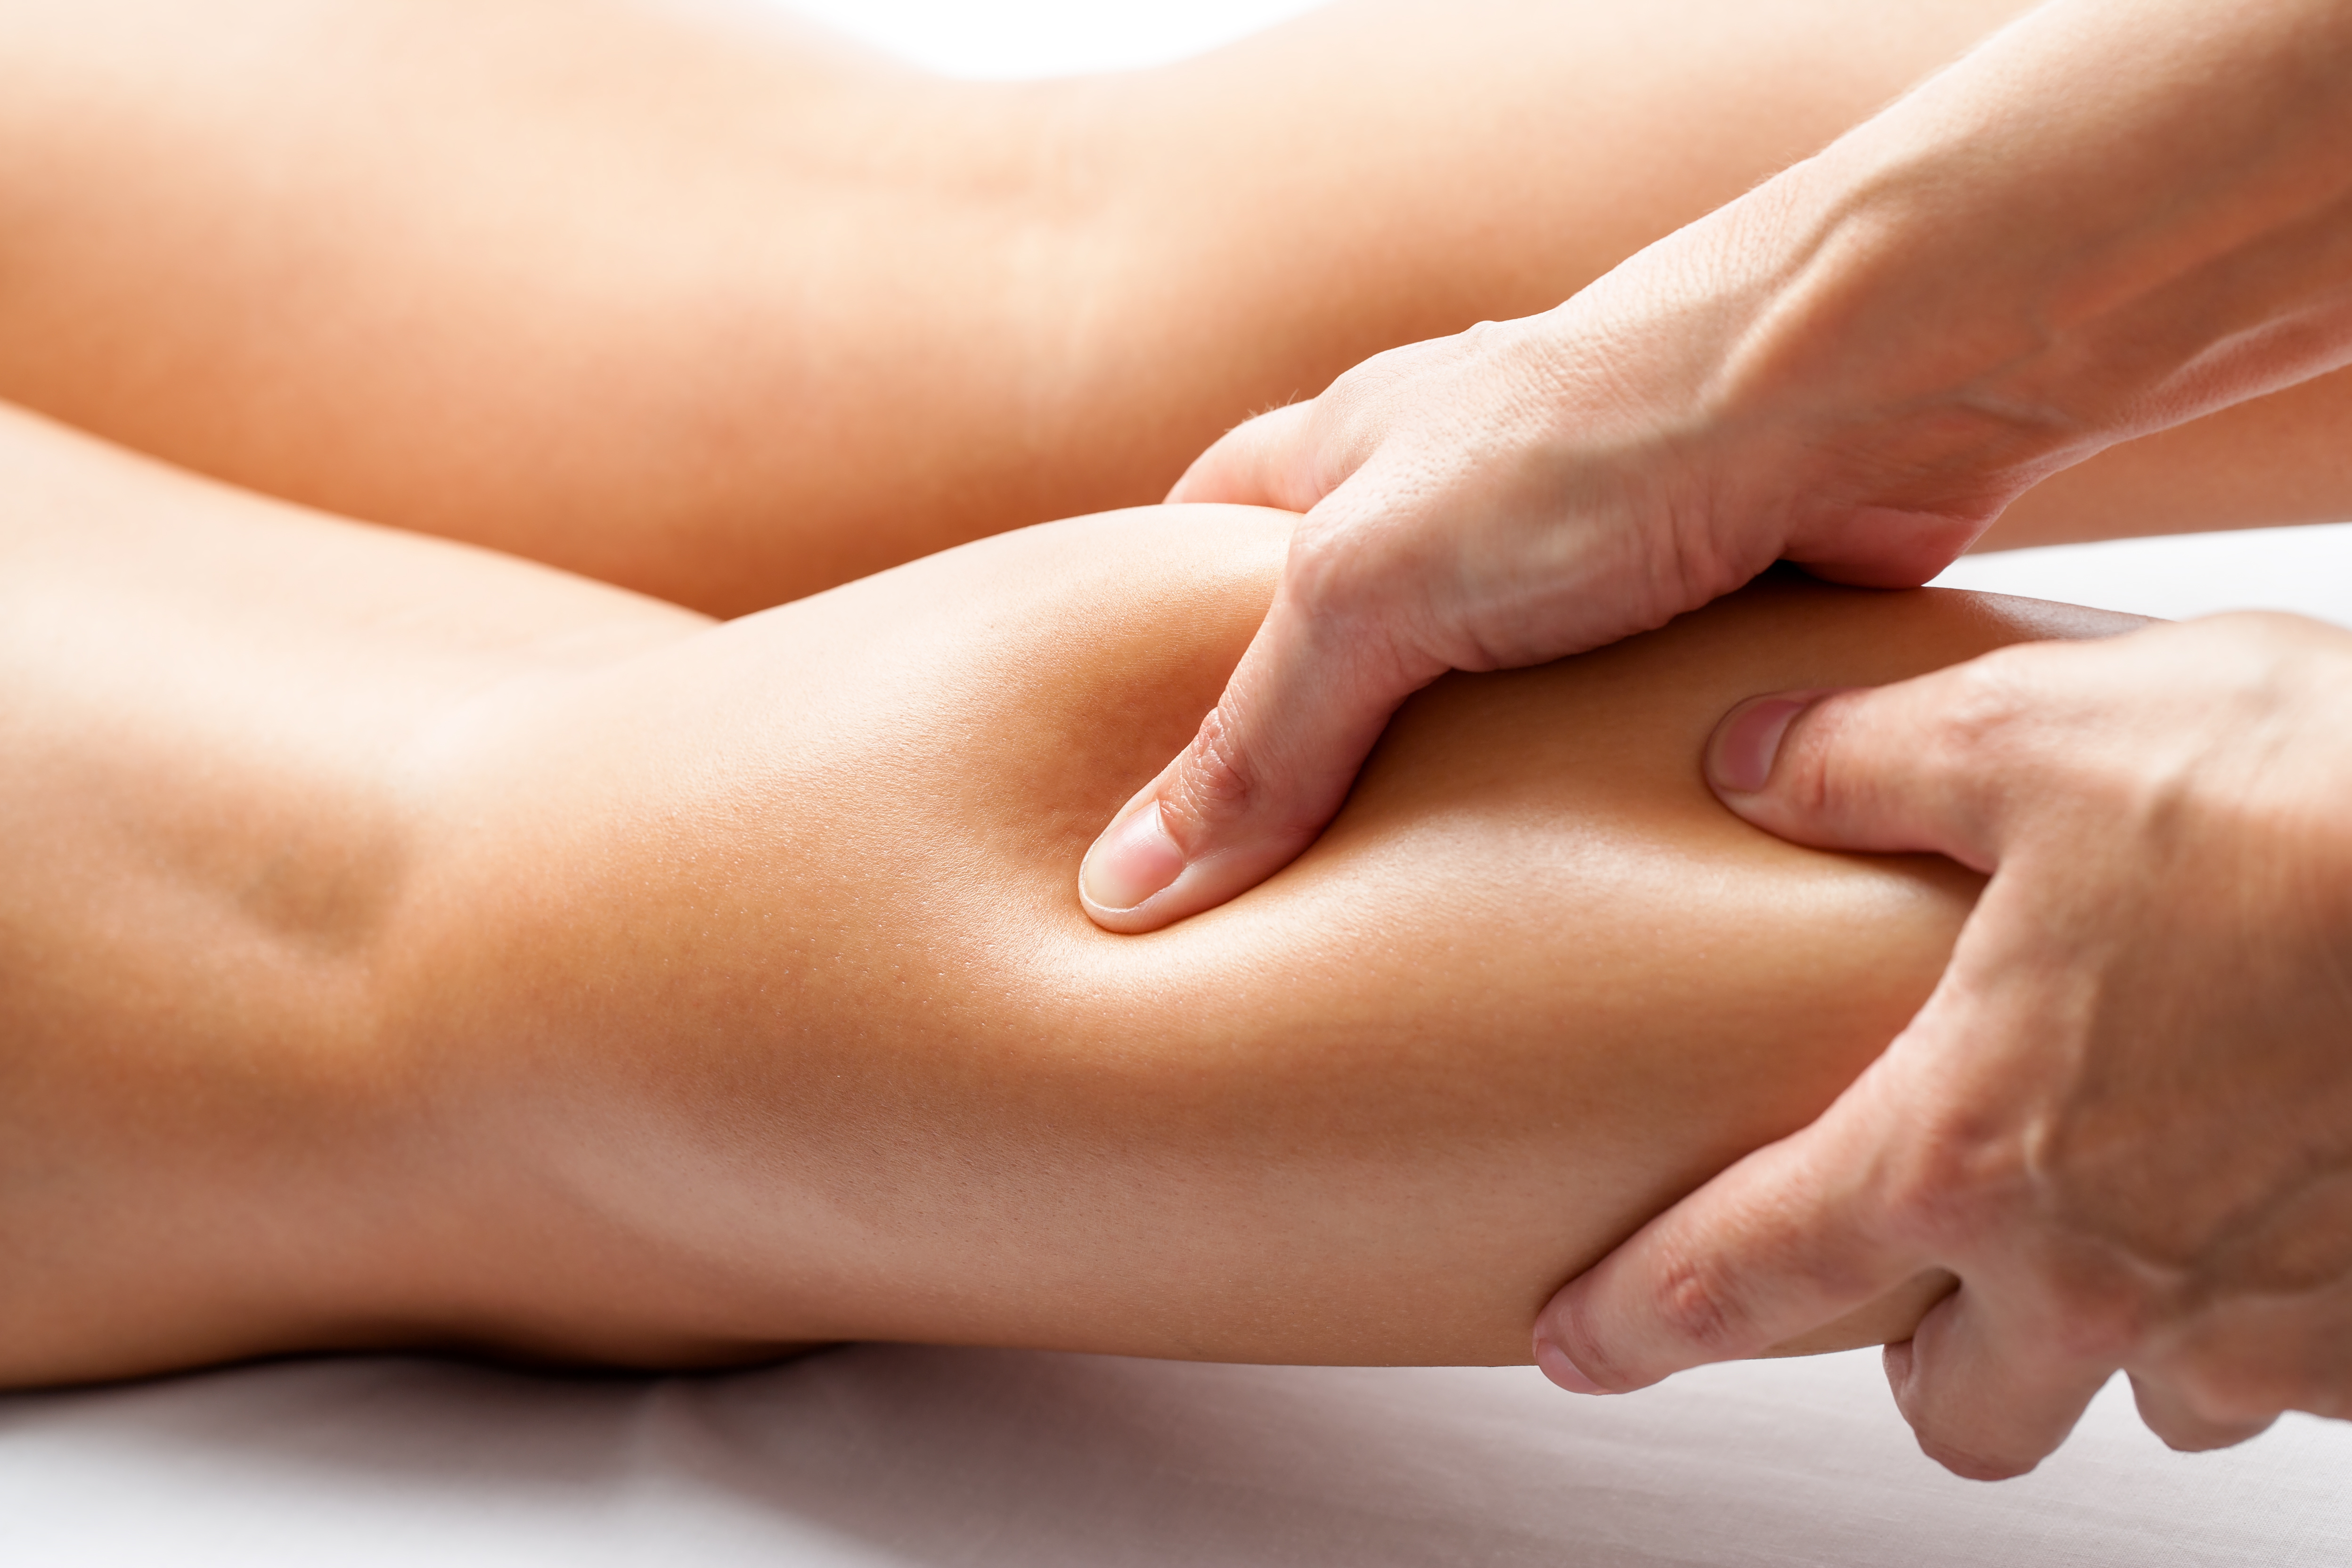 leg-being-massaged-by-therapist